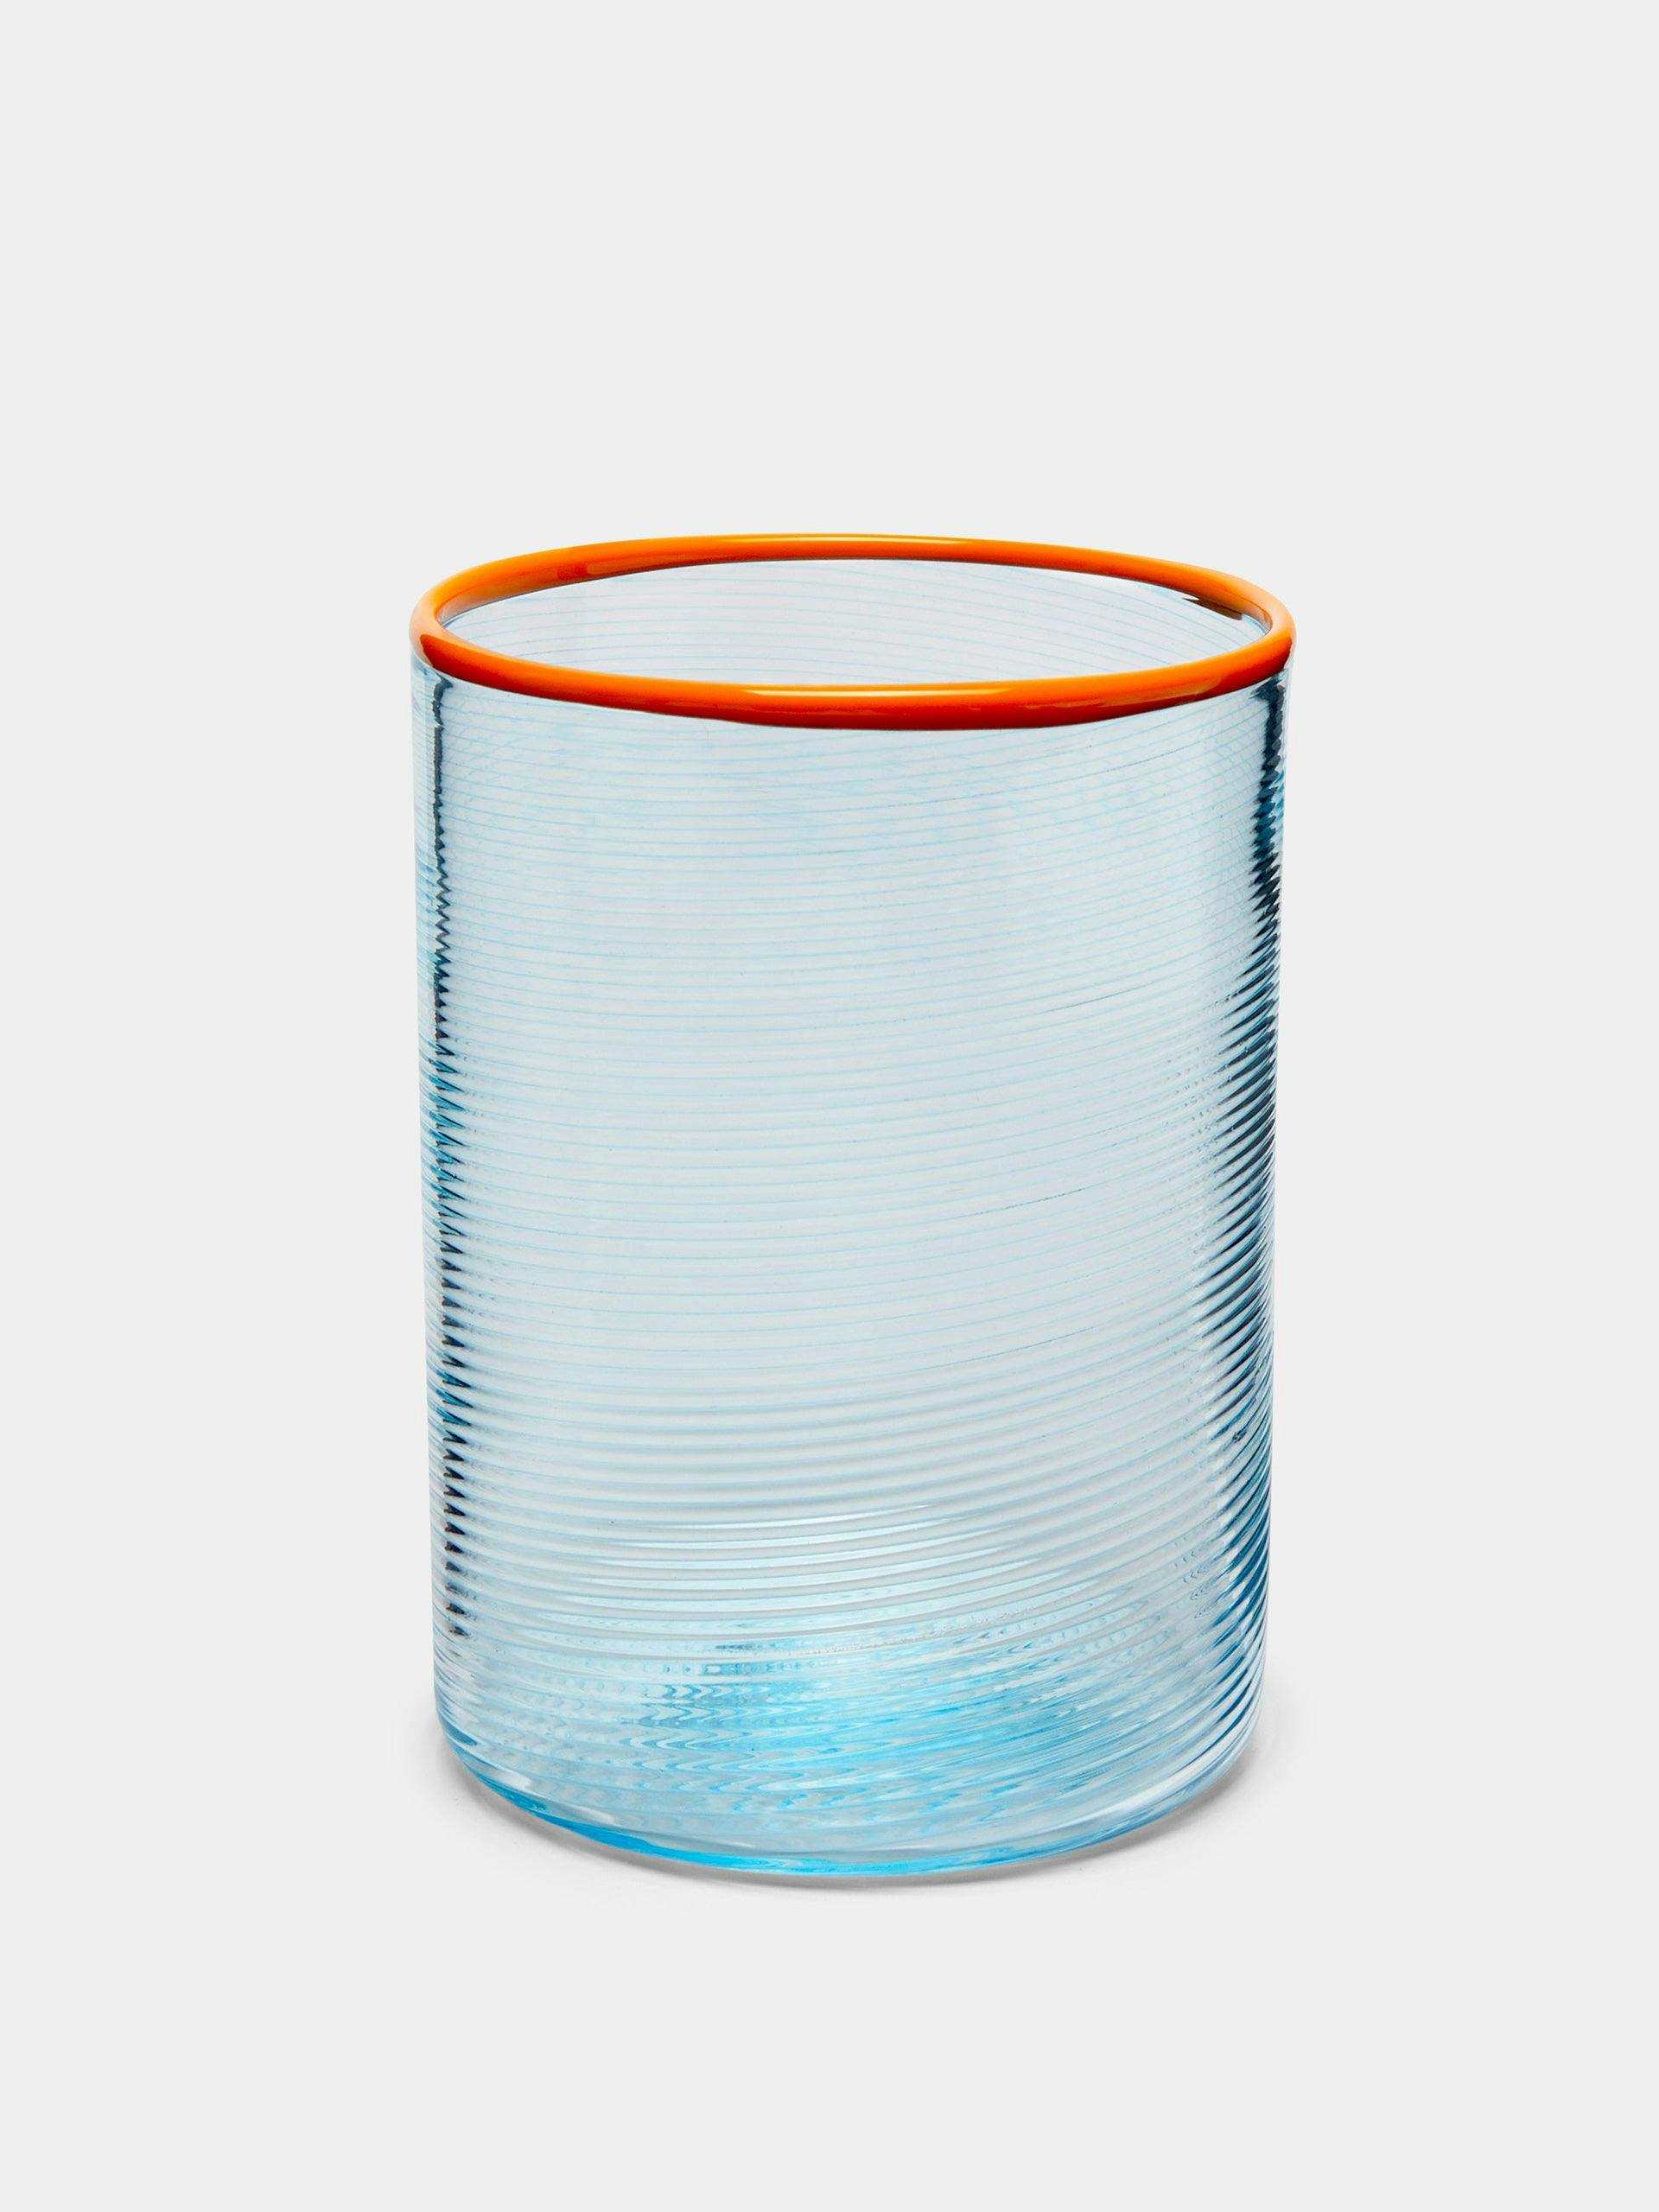 Glass tumbler with orange rim